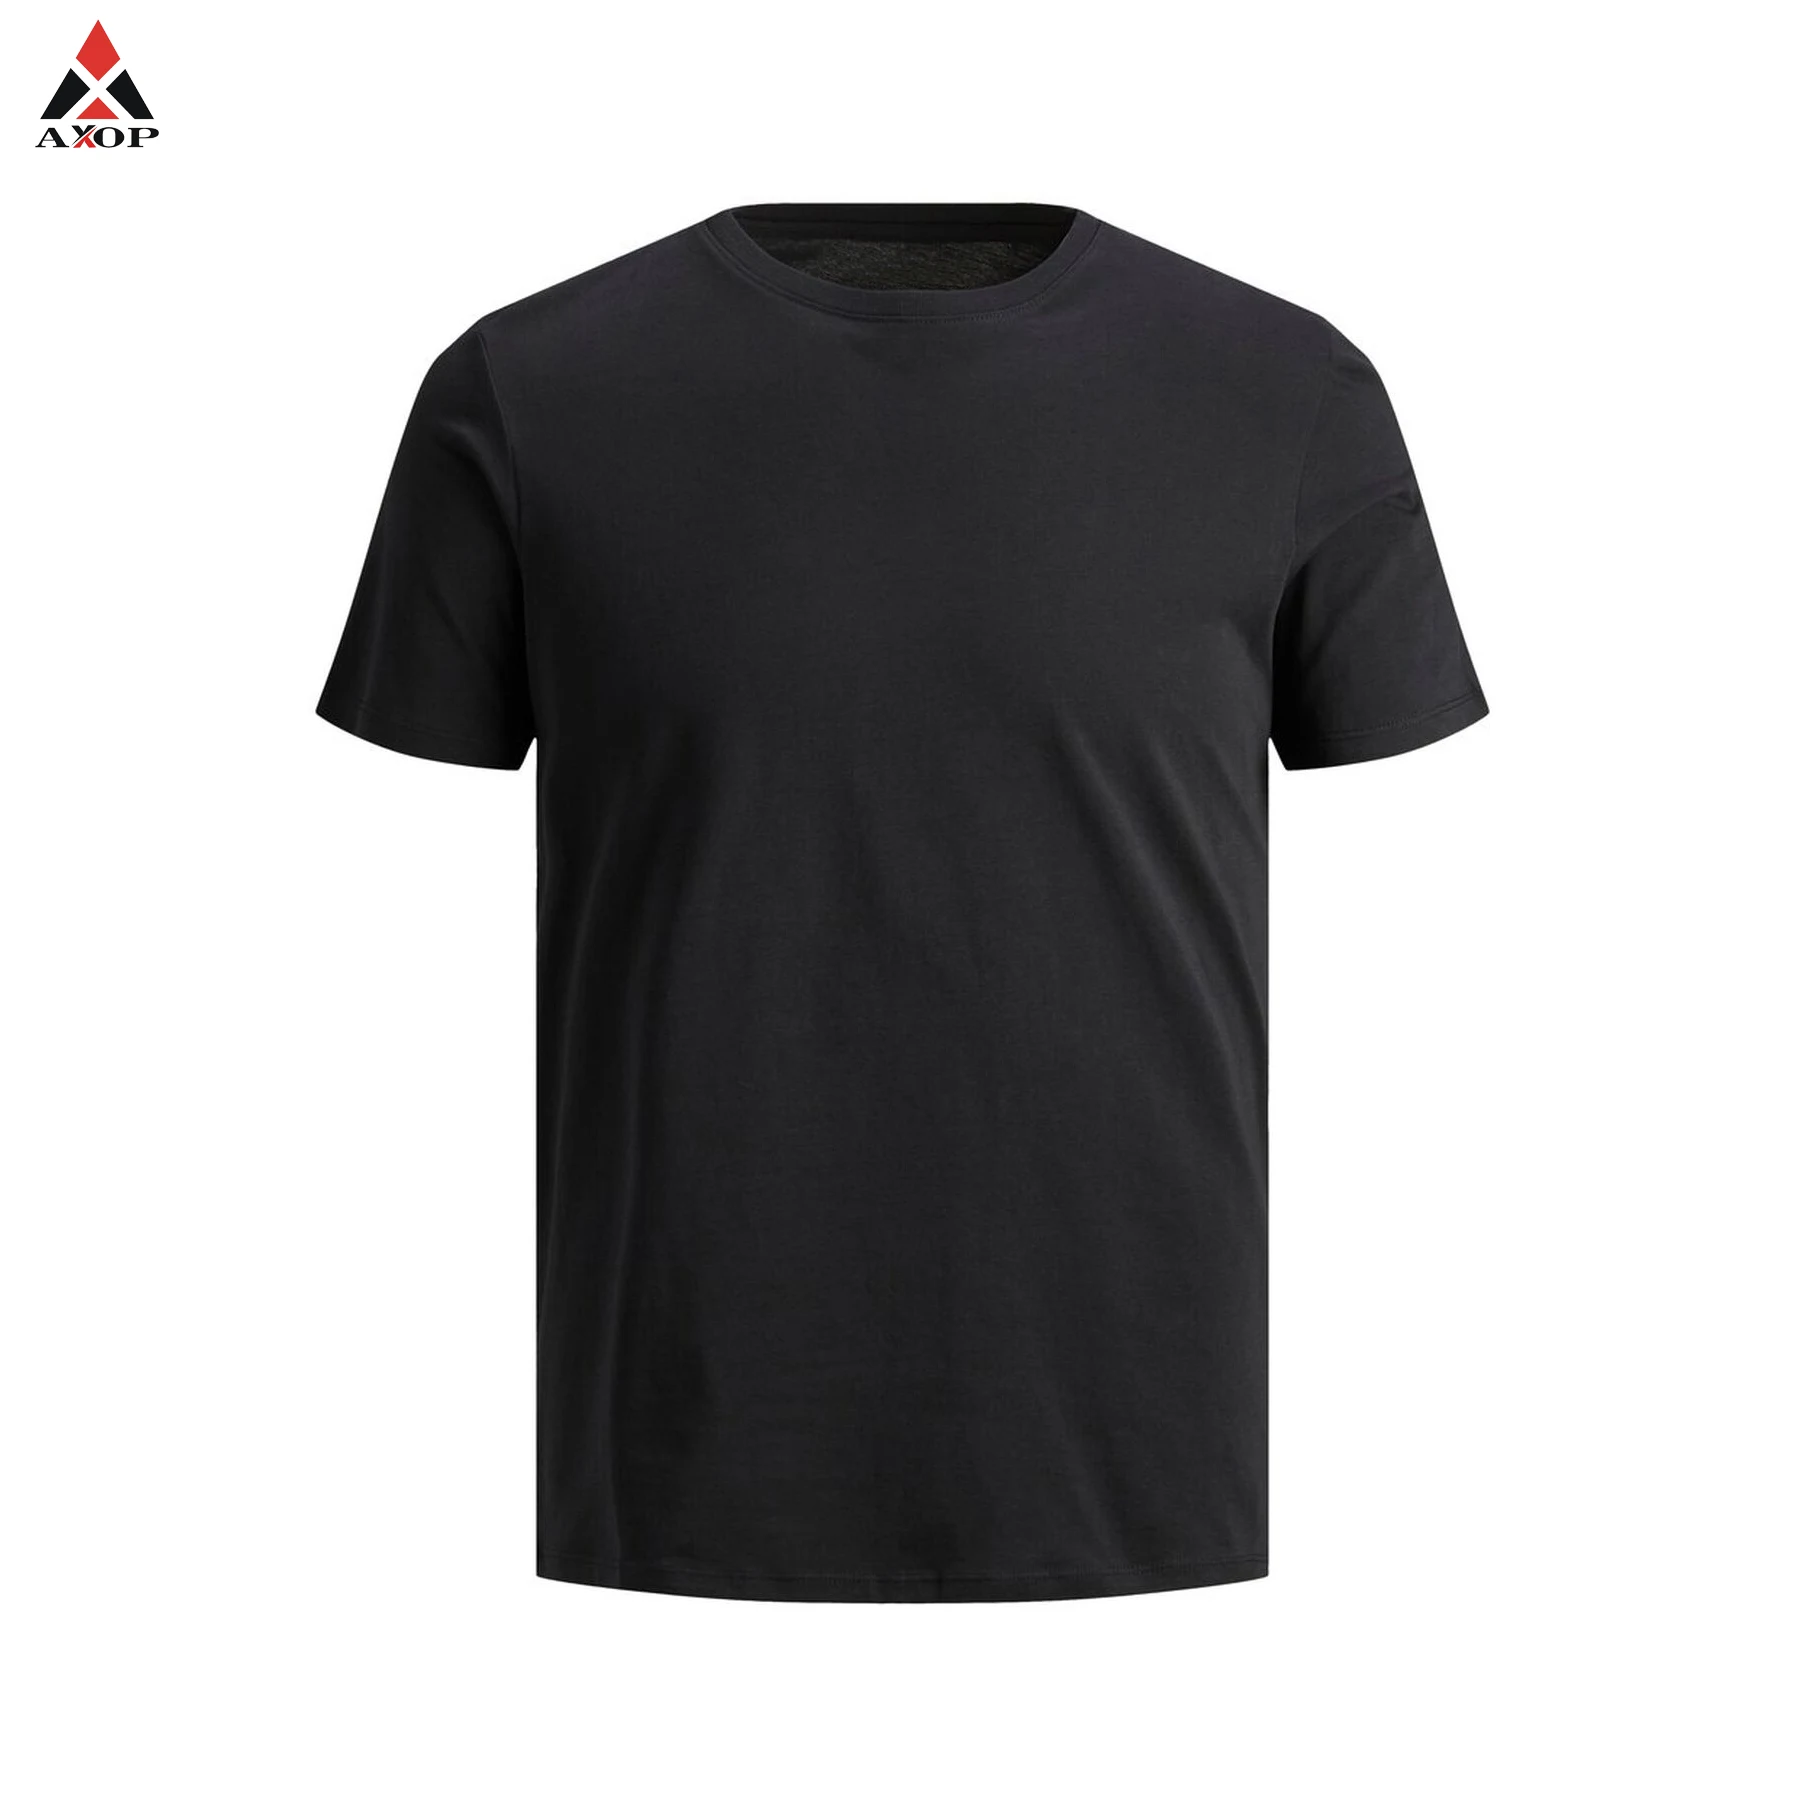 dry fit shirt design